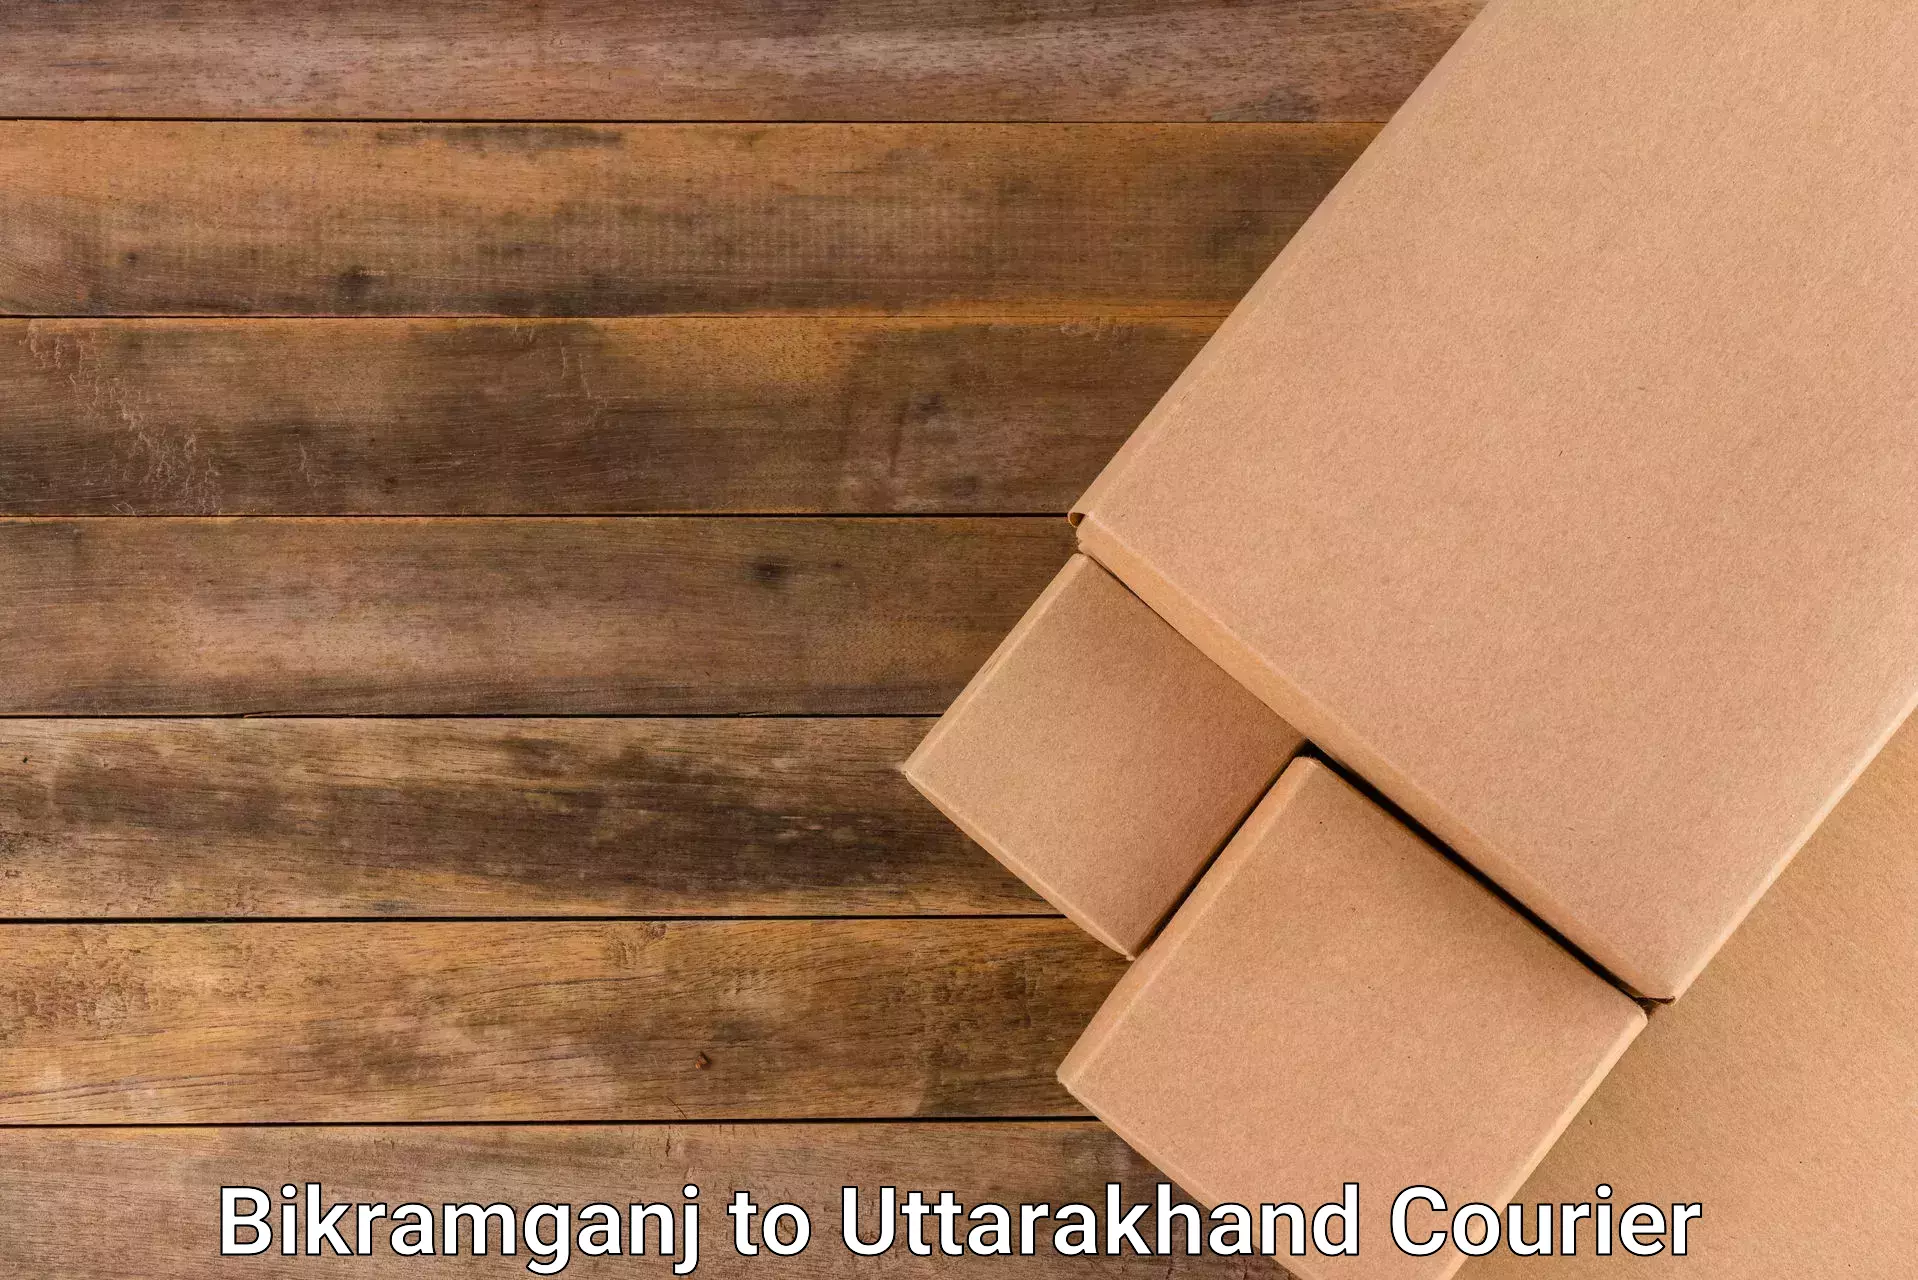 Local delivery service Bikramganj to Uttarakhand